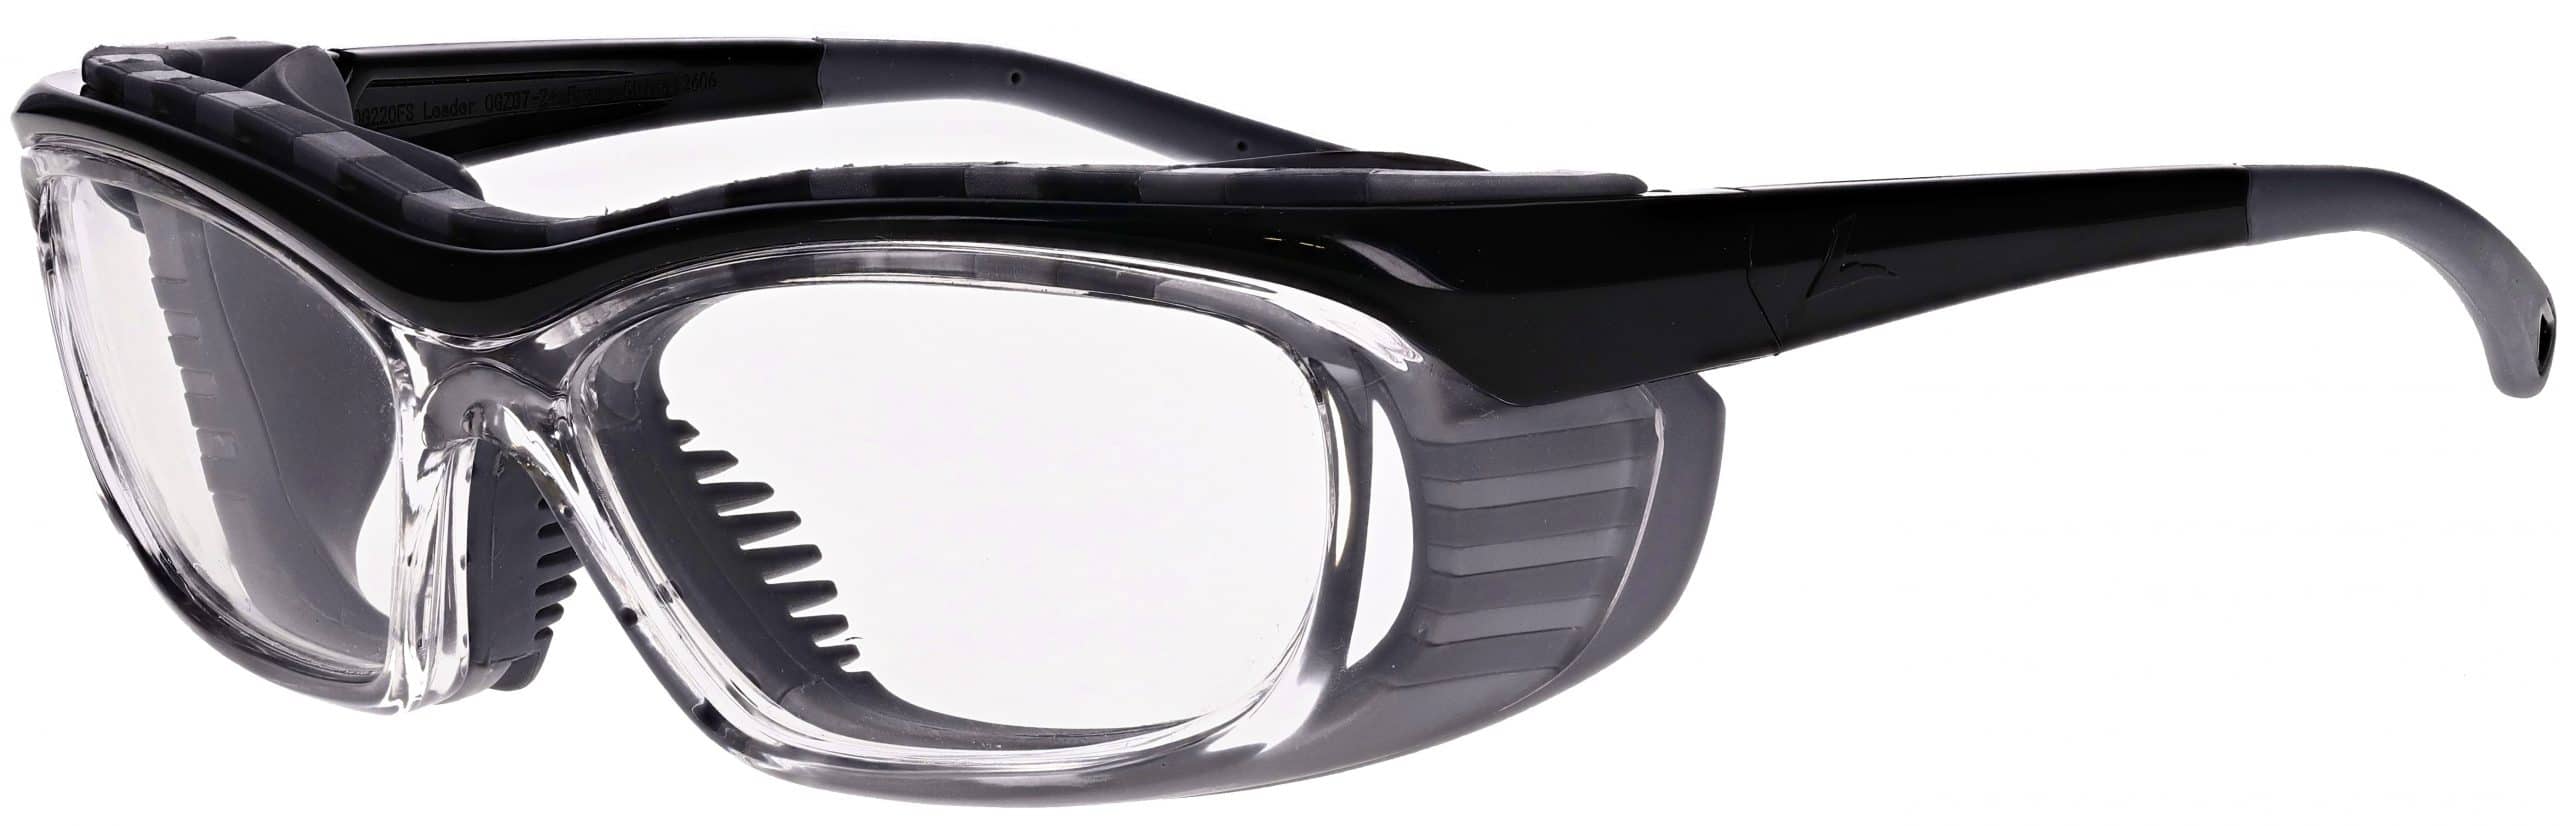 Pyramex # S520S Solo Safety Eyewear with Smoke Lens | ABCsafetymart.com